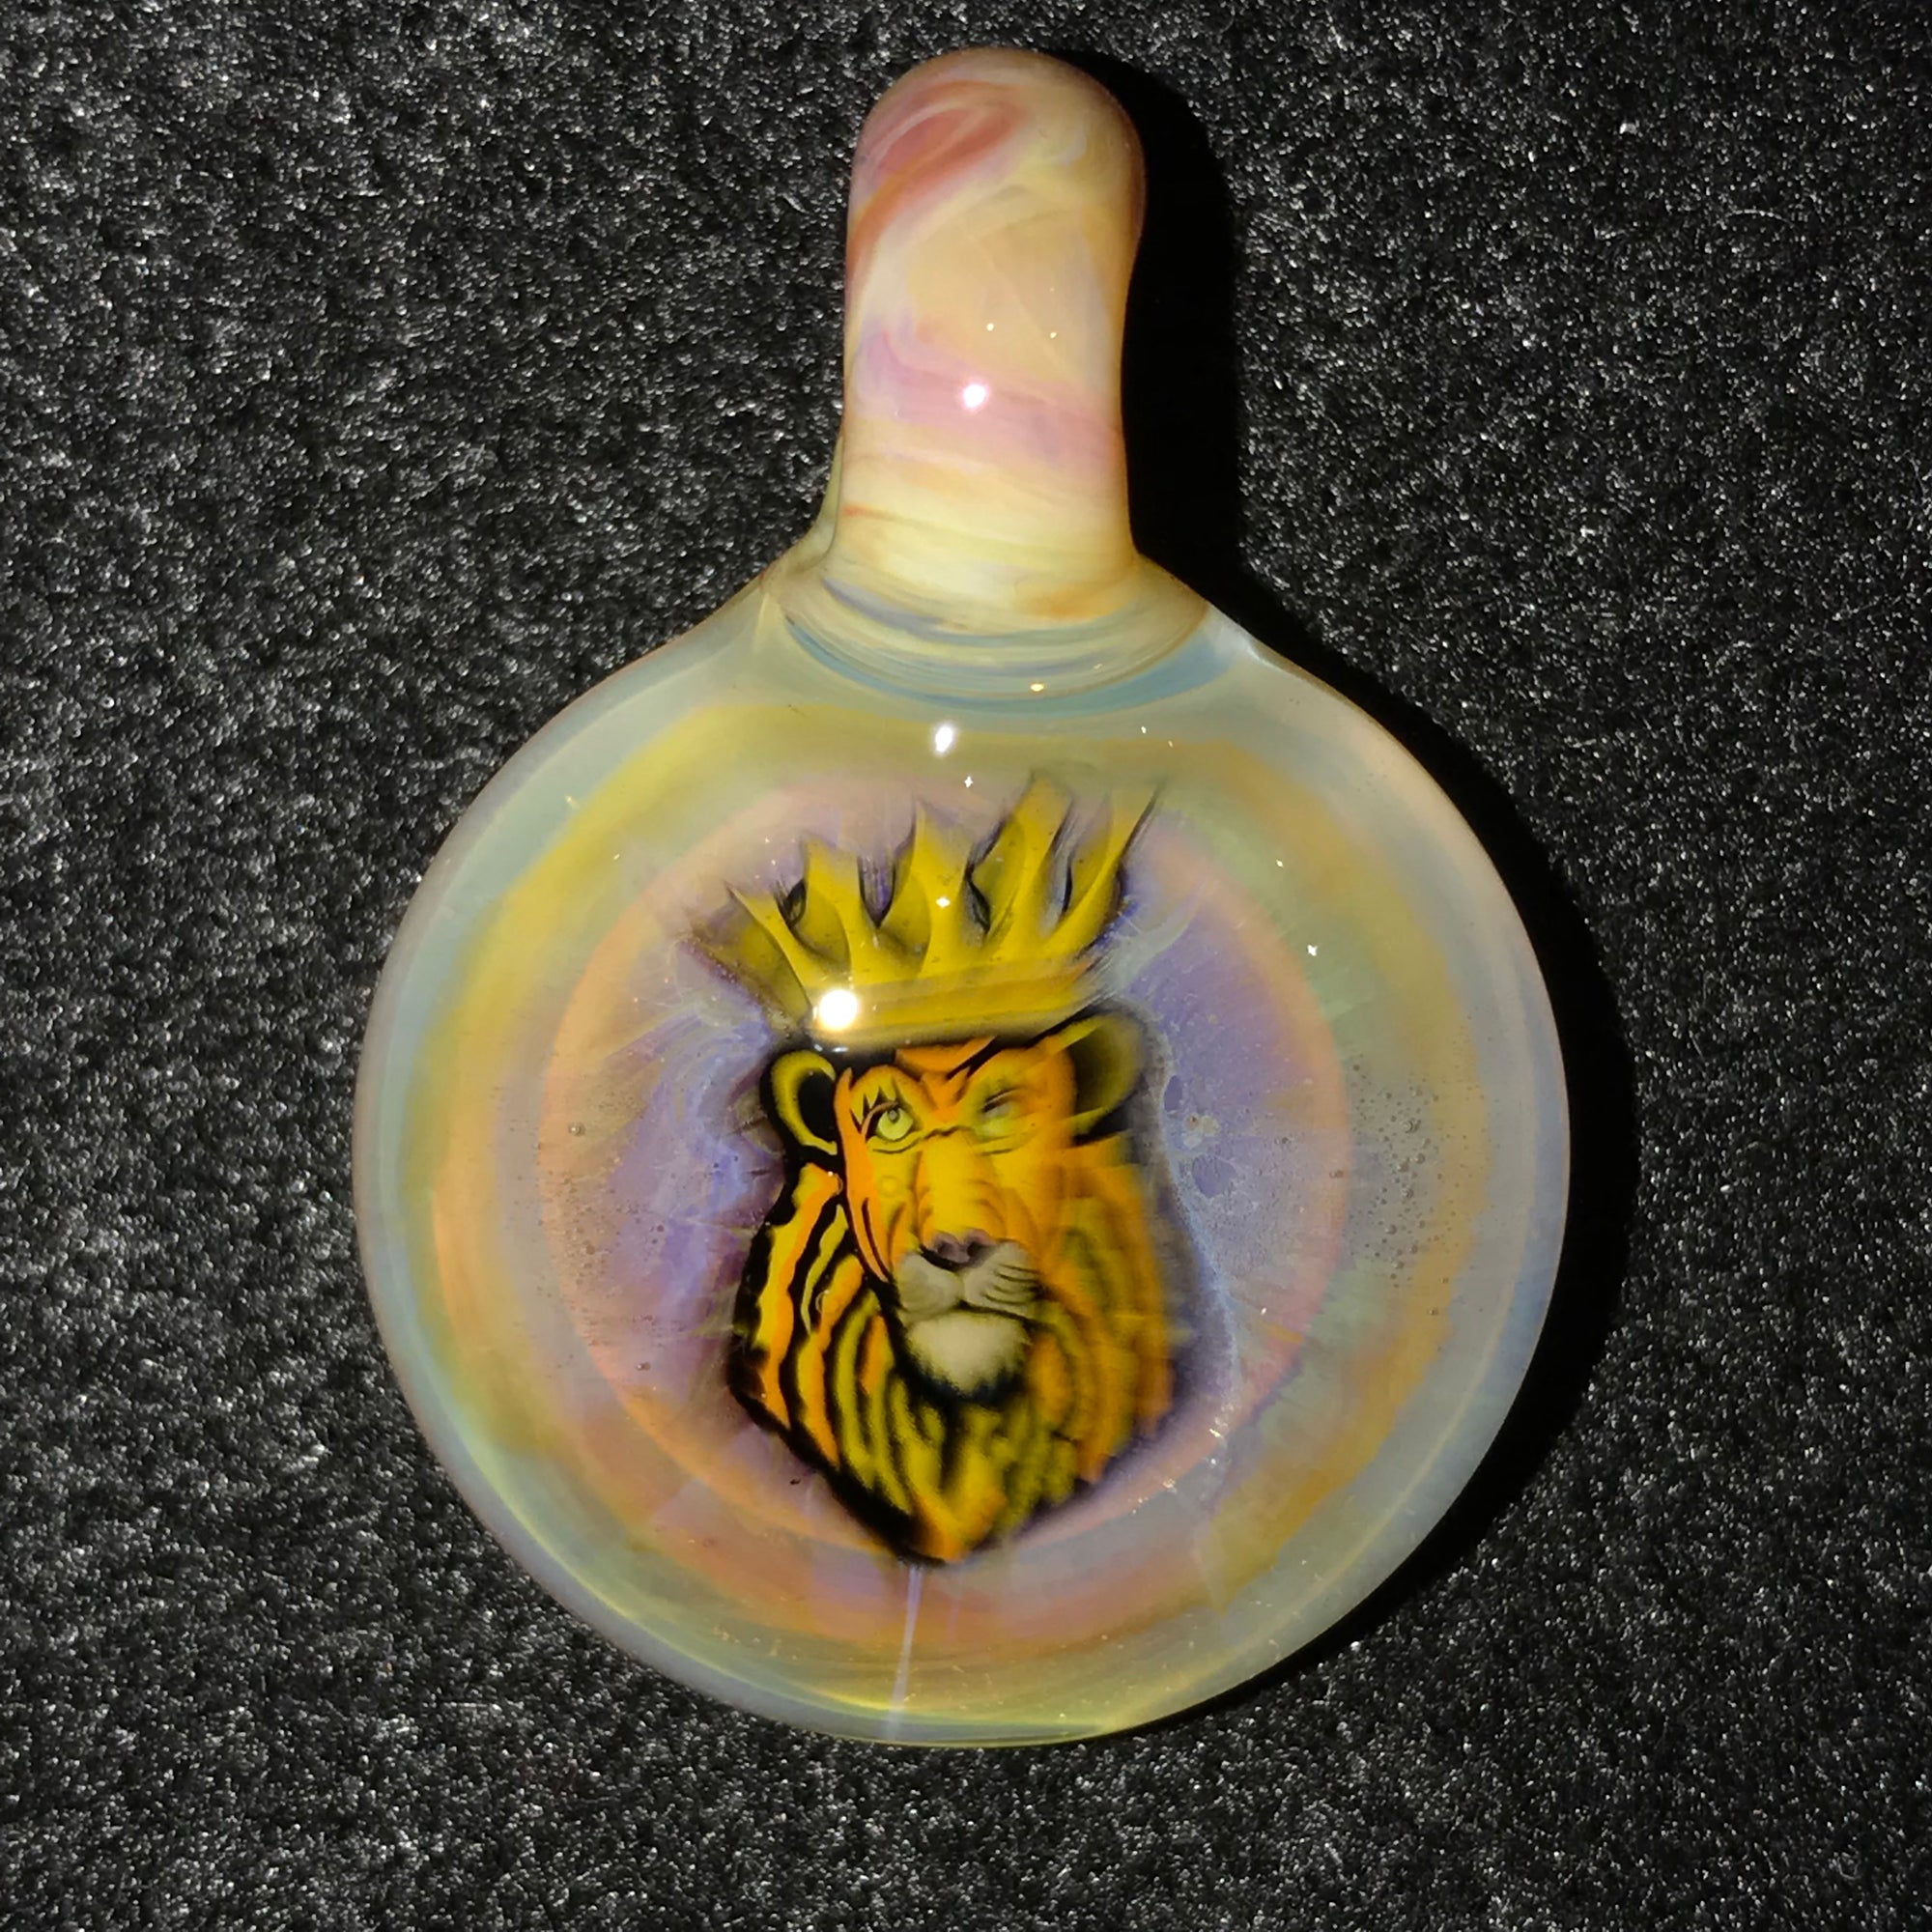 Crowned Lion King Milli Image Pendant (Amber Purple/Orange/Yellow)